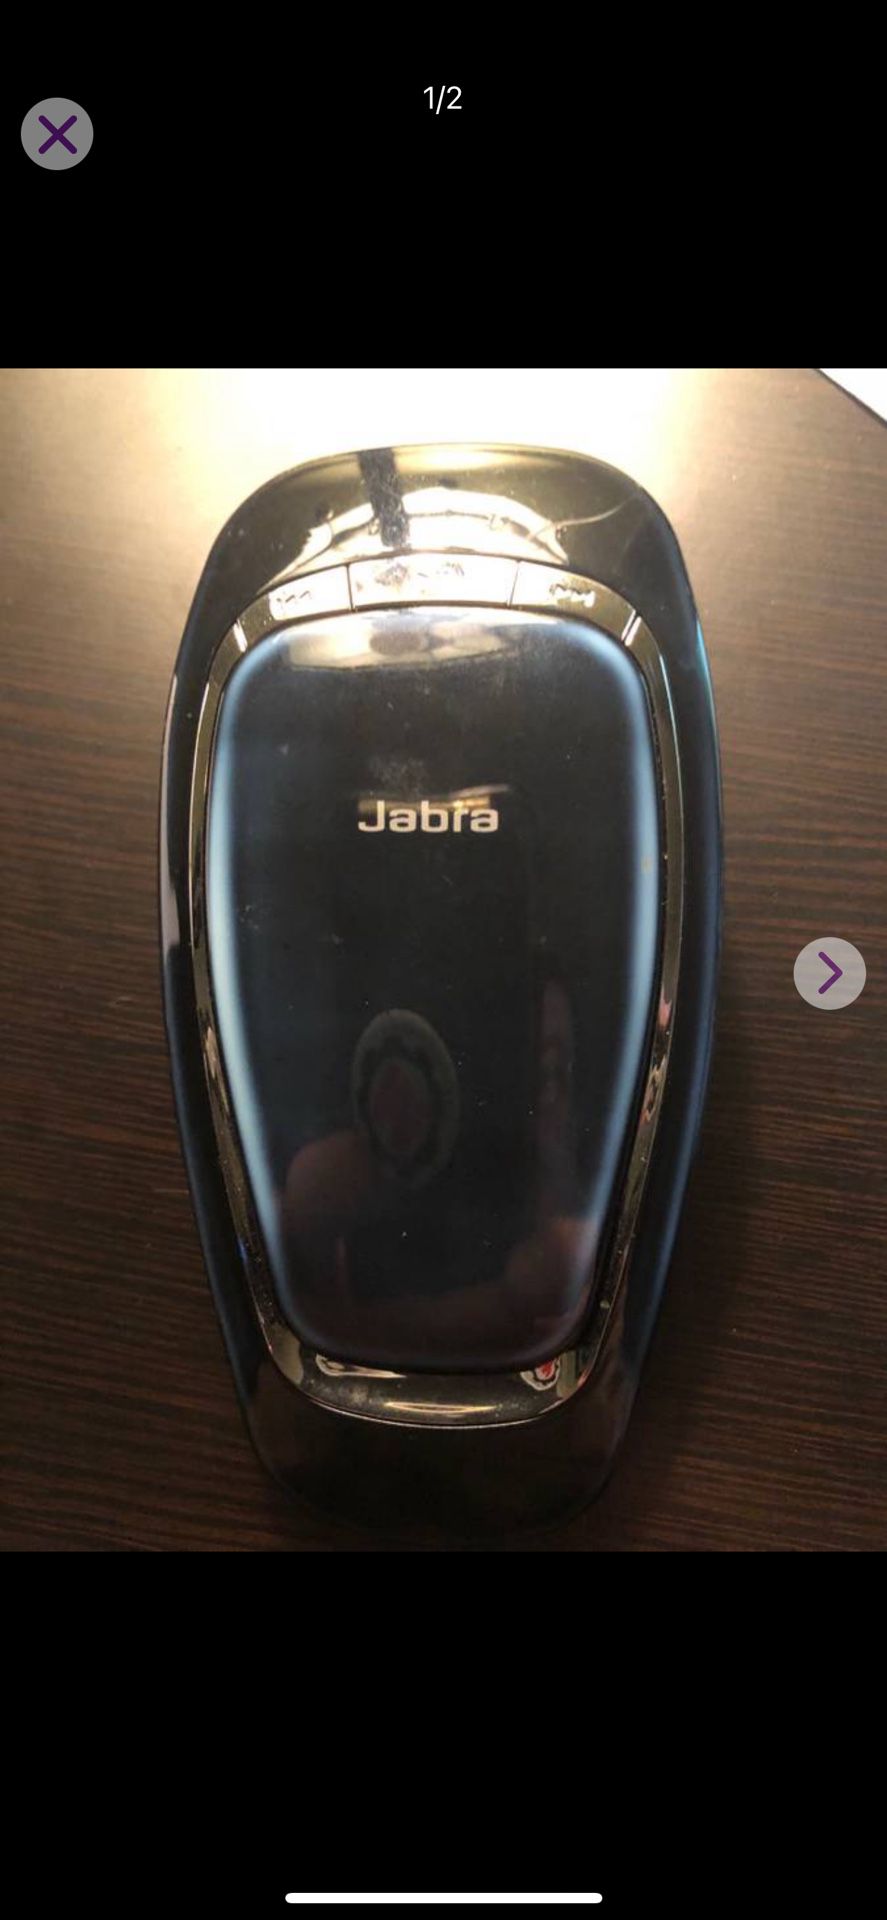 Jabra Cruiser Bluetooth Car Speakerphone